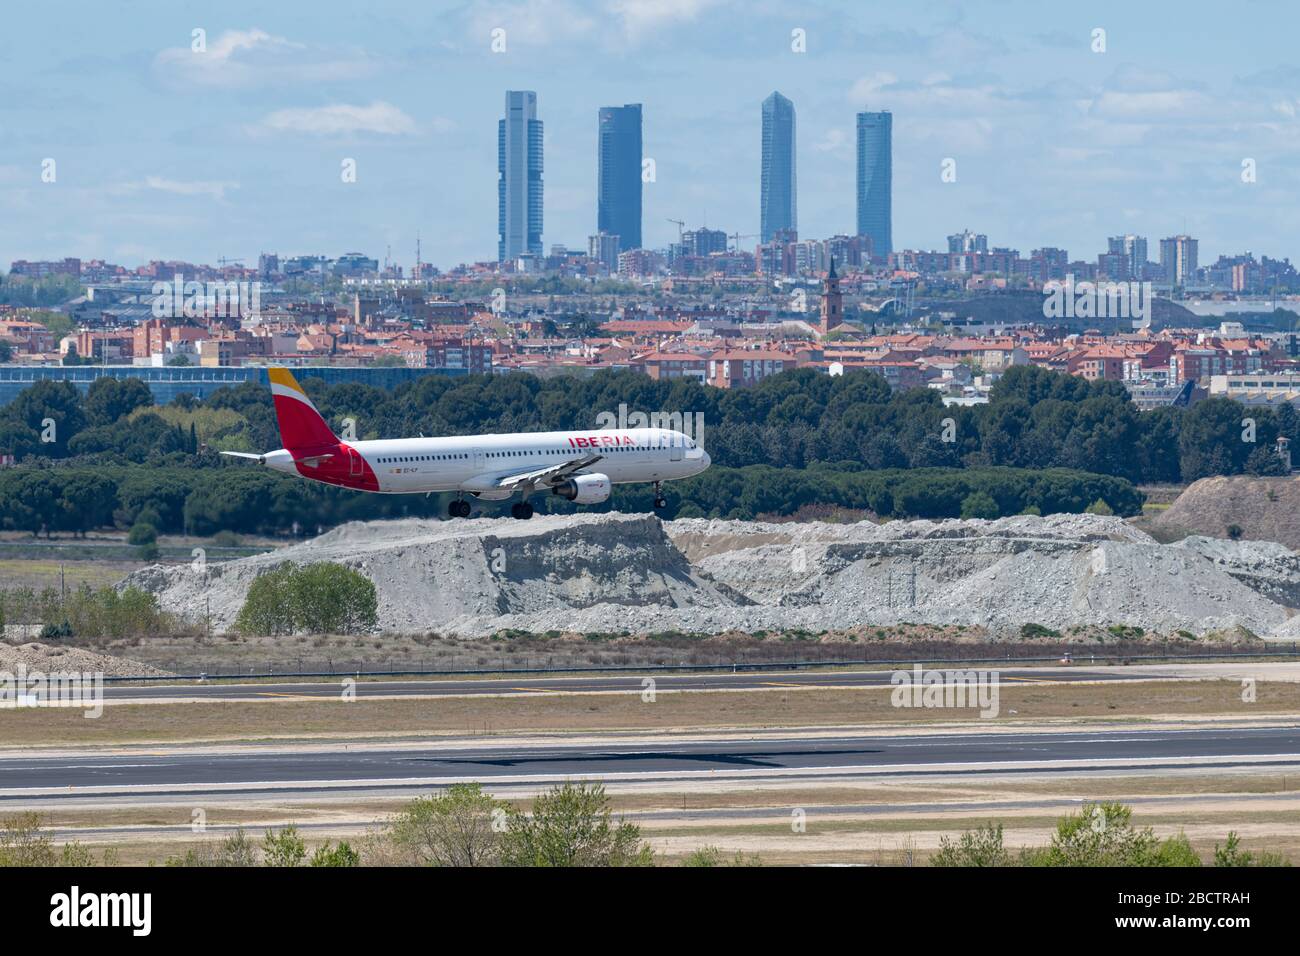 MADRID, SPANIEN - 14. APRIL 2019: Iberia Airlines Airbus A320 Passagierflugzeug Landung auf dem Madrid-Barajas International Airport Adolfo Suarez im Backg Stockfoto